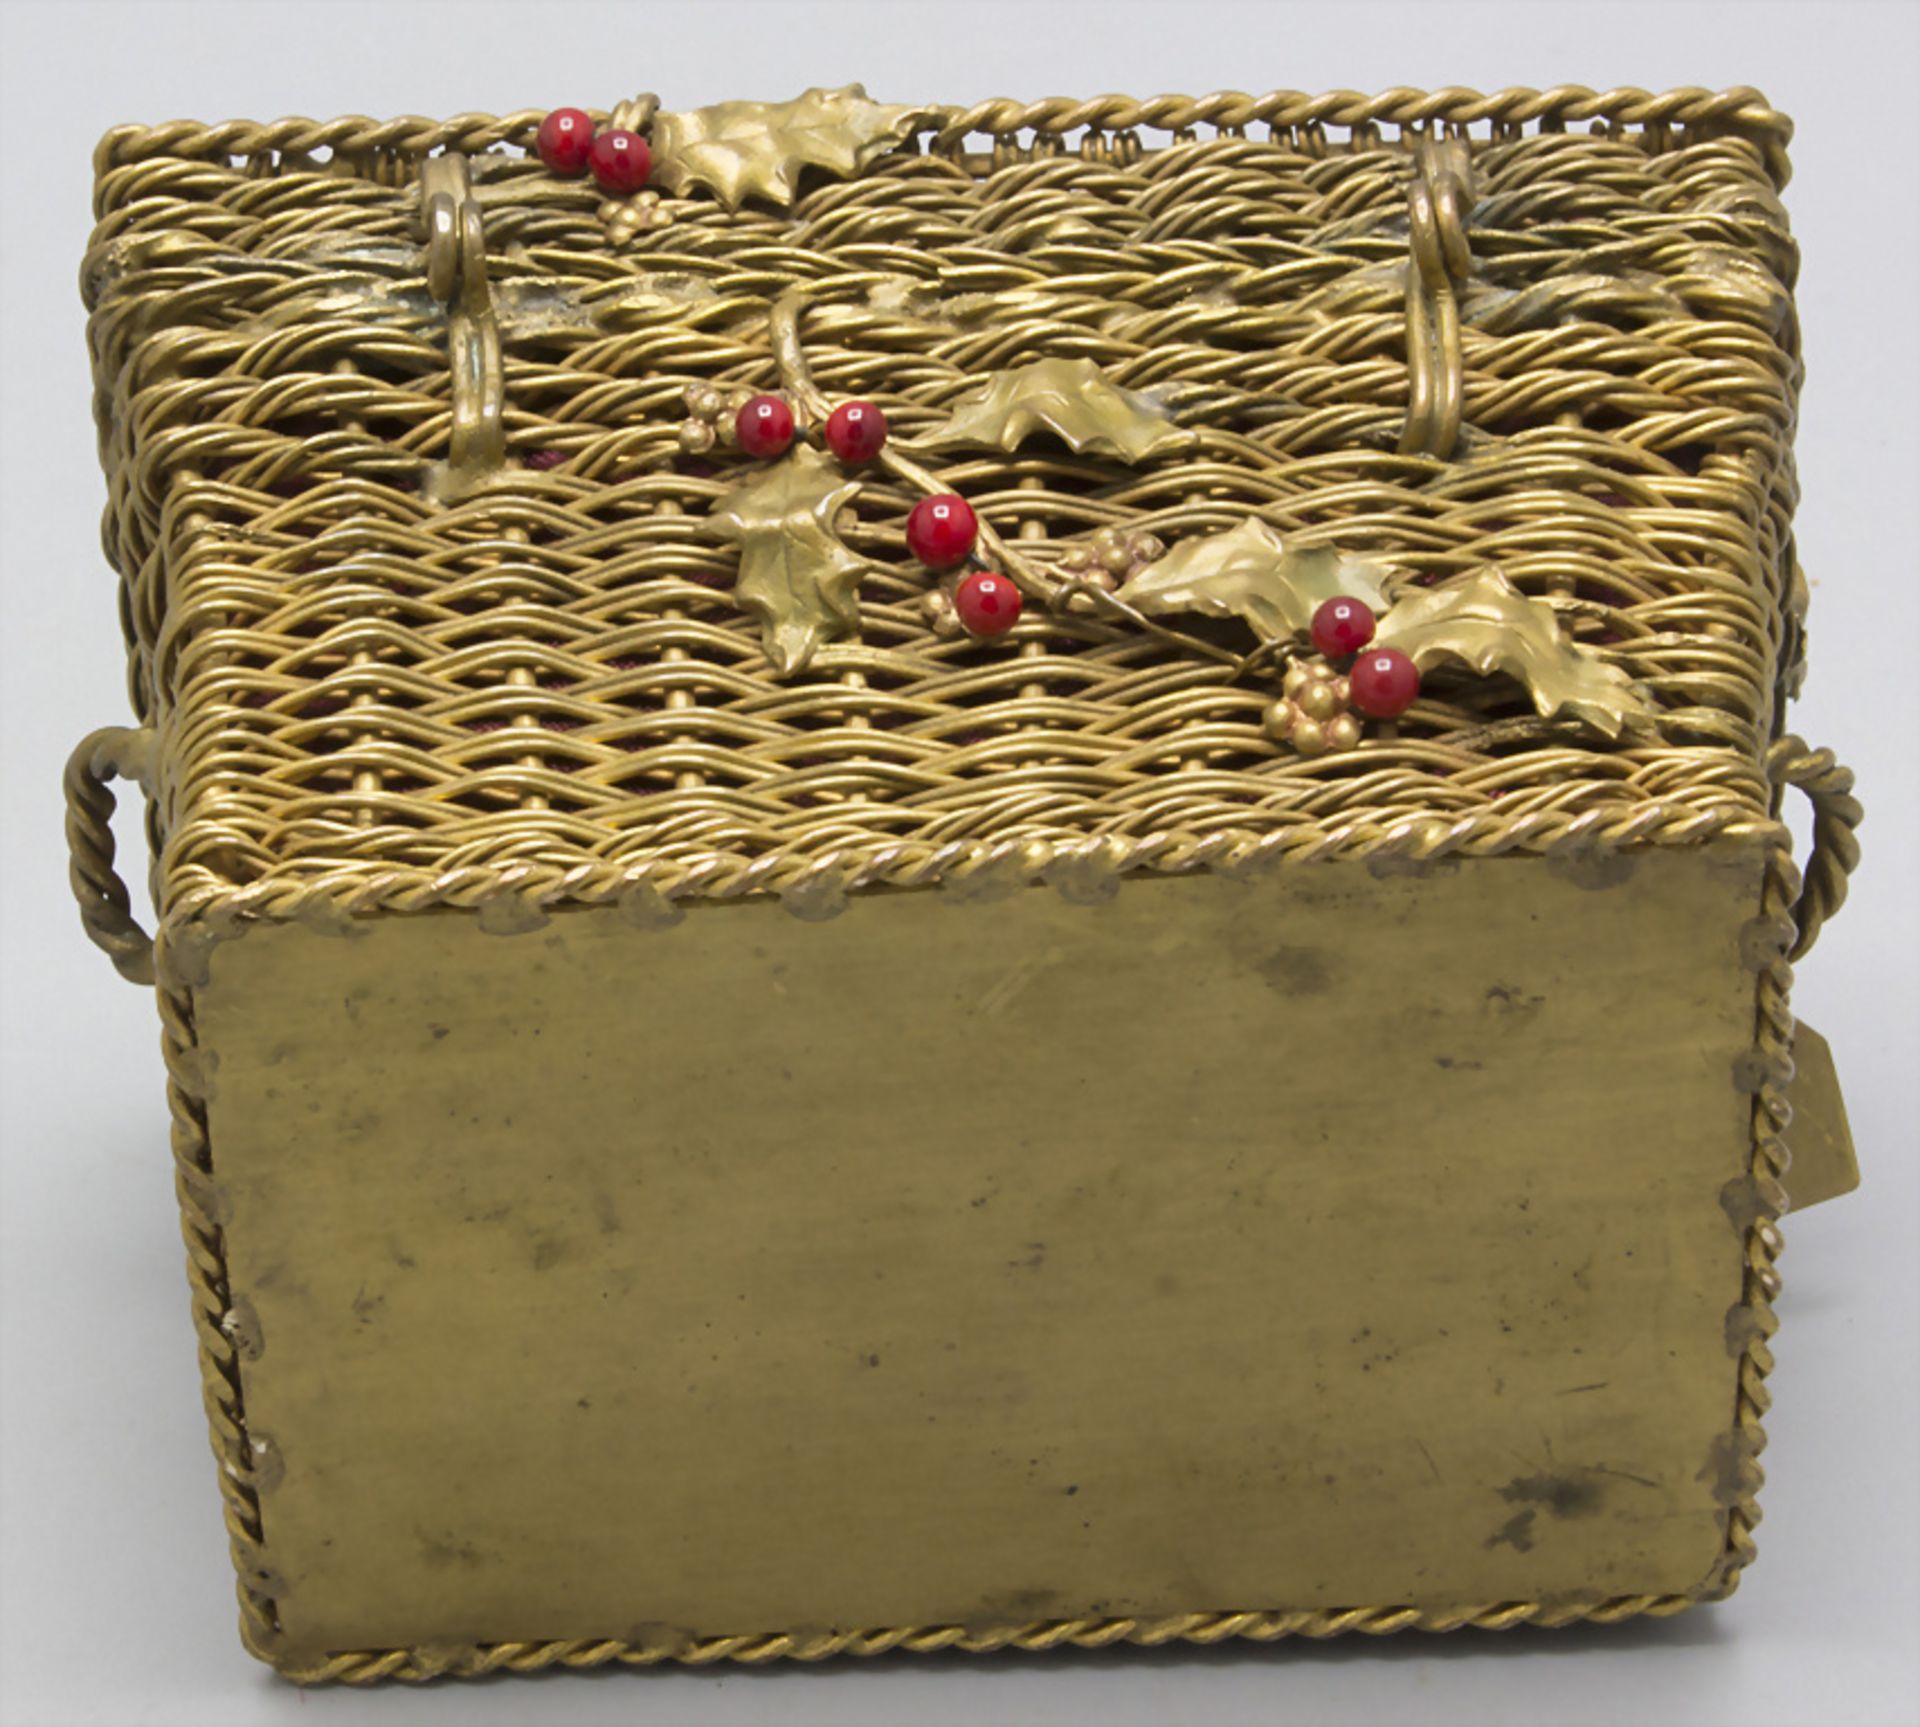 Miniatur Weidentruhe als Schmuckdose / A miniature bronze willow chest with holly branches as ... - Bild 4 aus 4